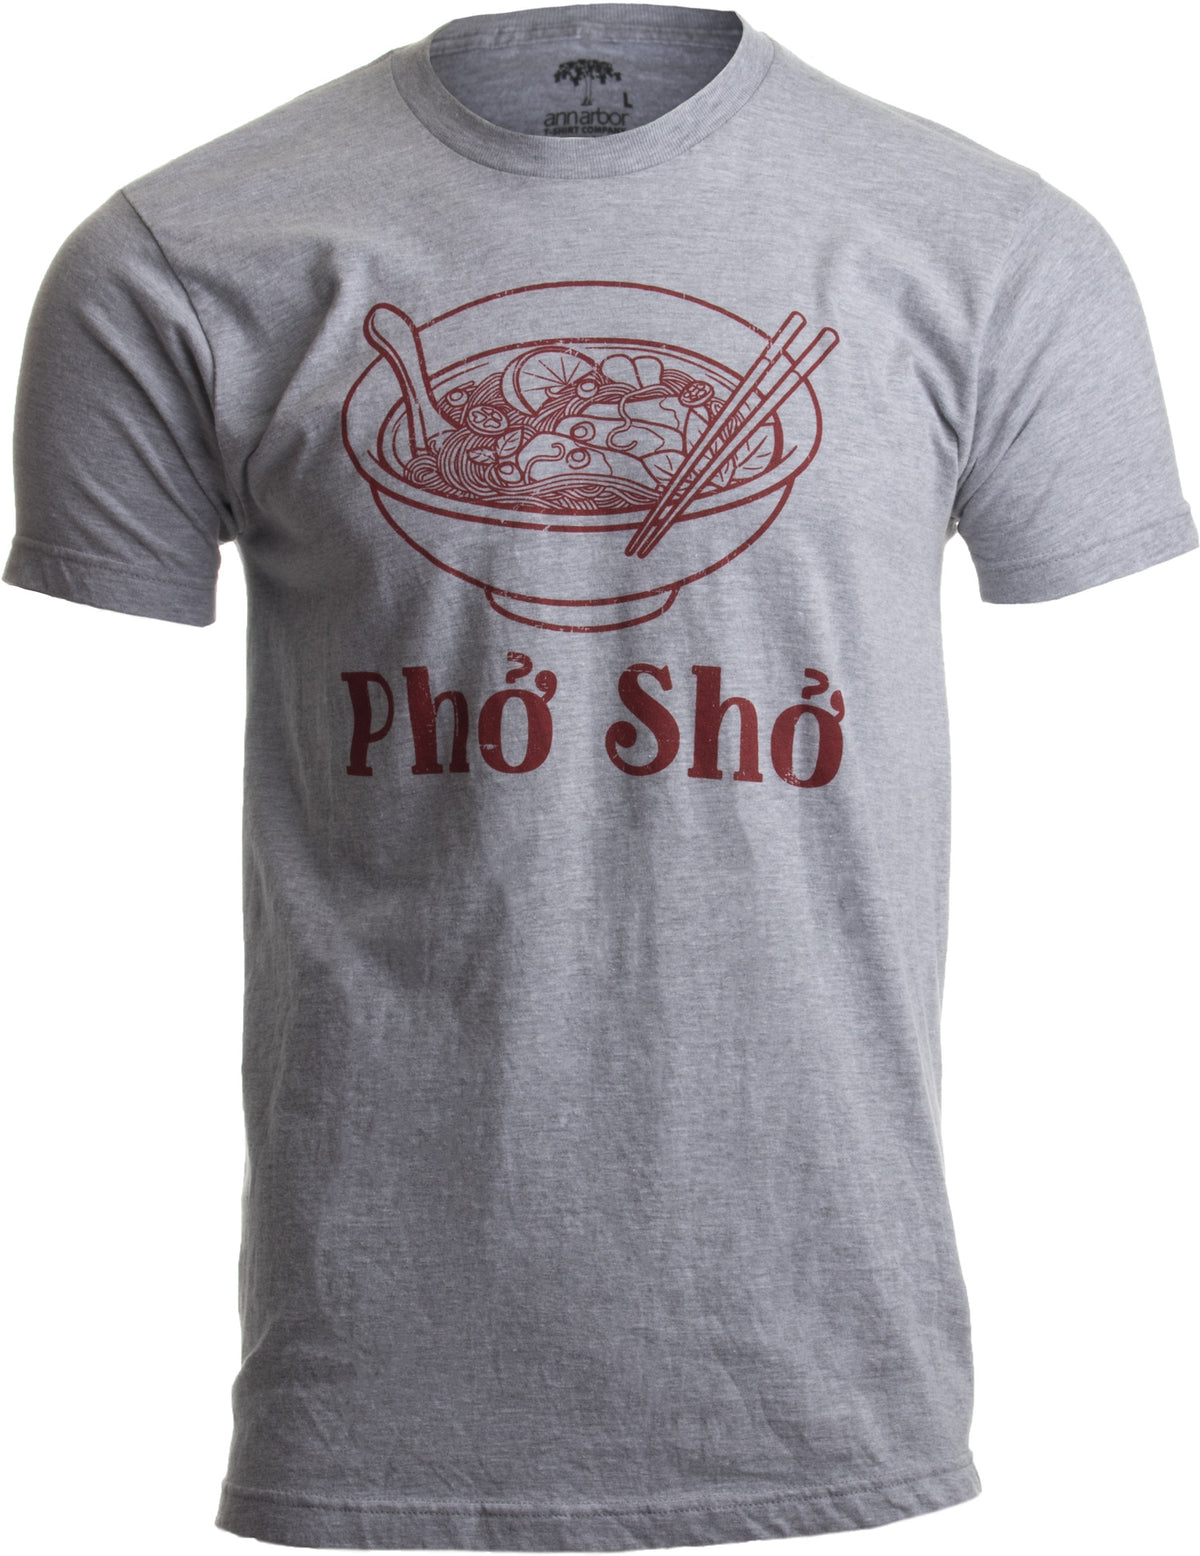 Pho Sho Funny Vietnamese Cuisine Vietnam Foodie Chef Cook Food Joke T-shirt